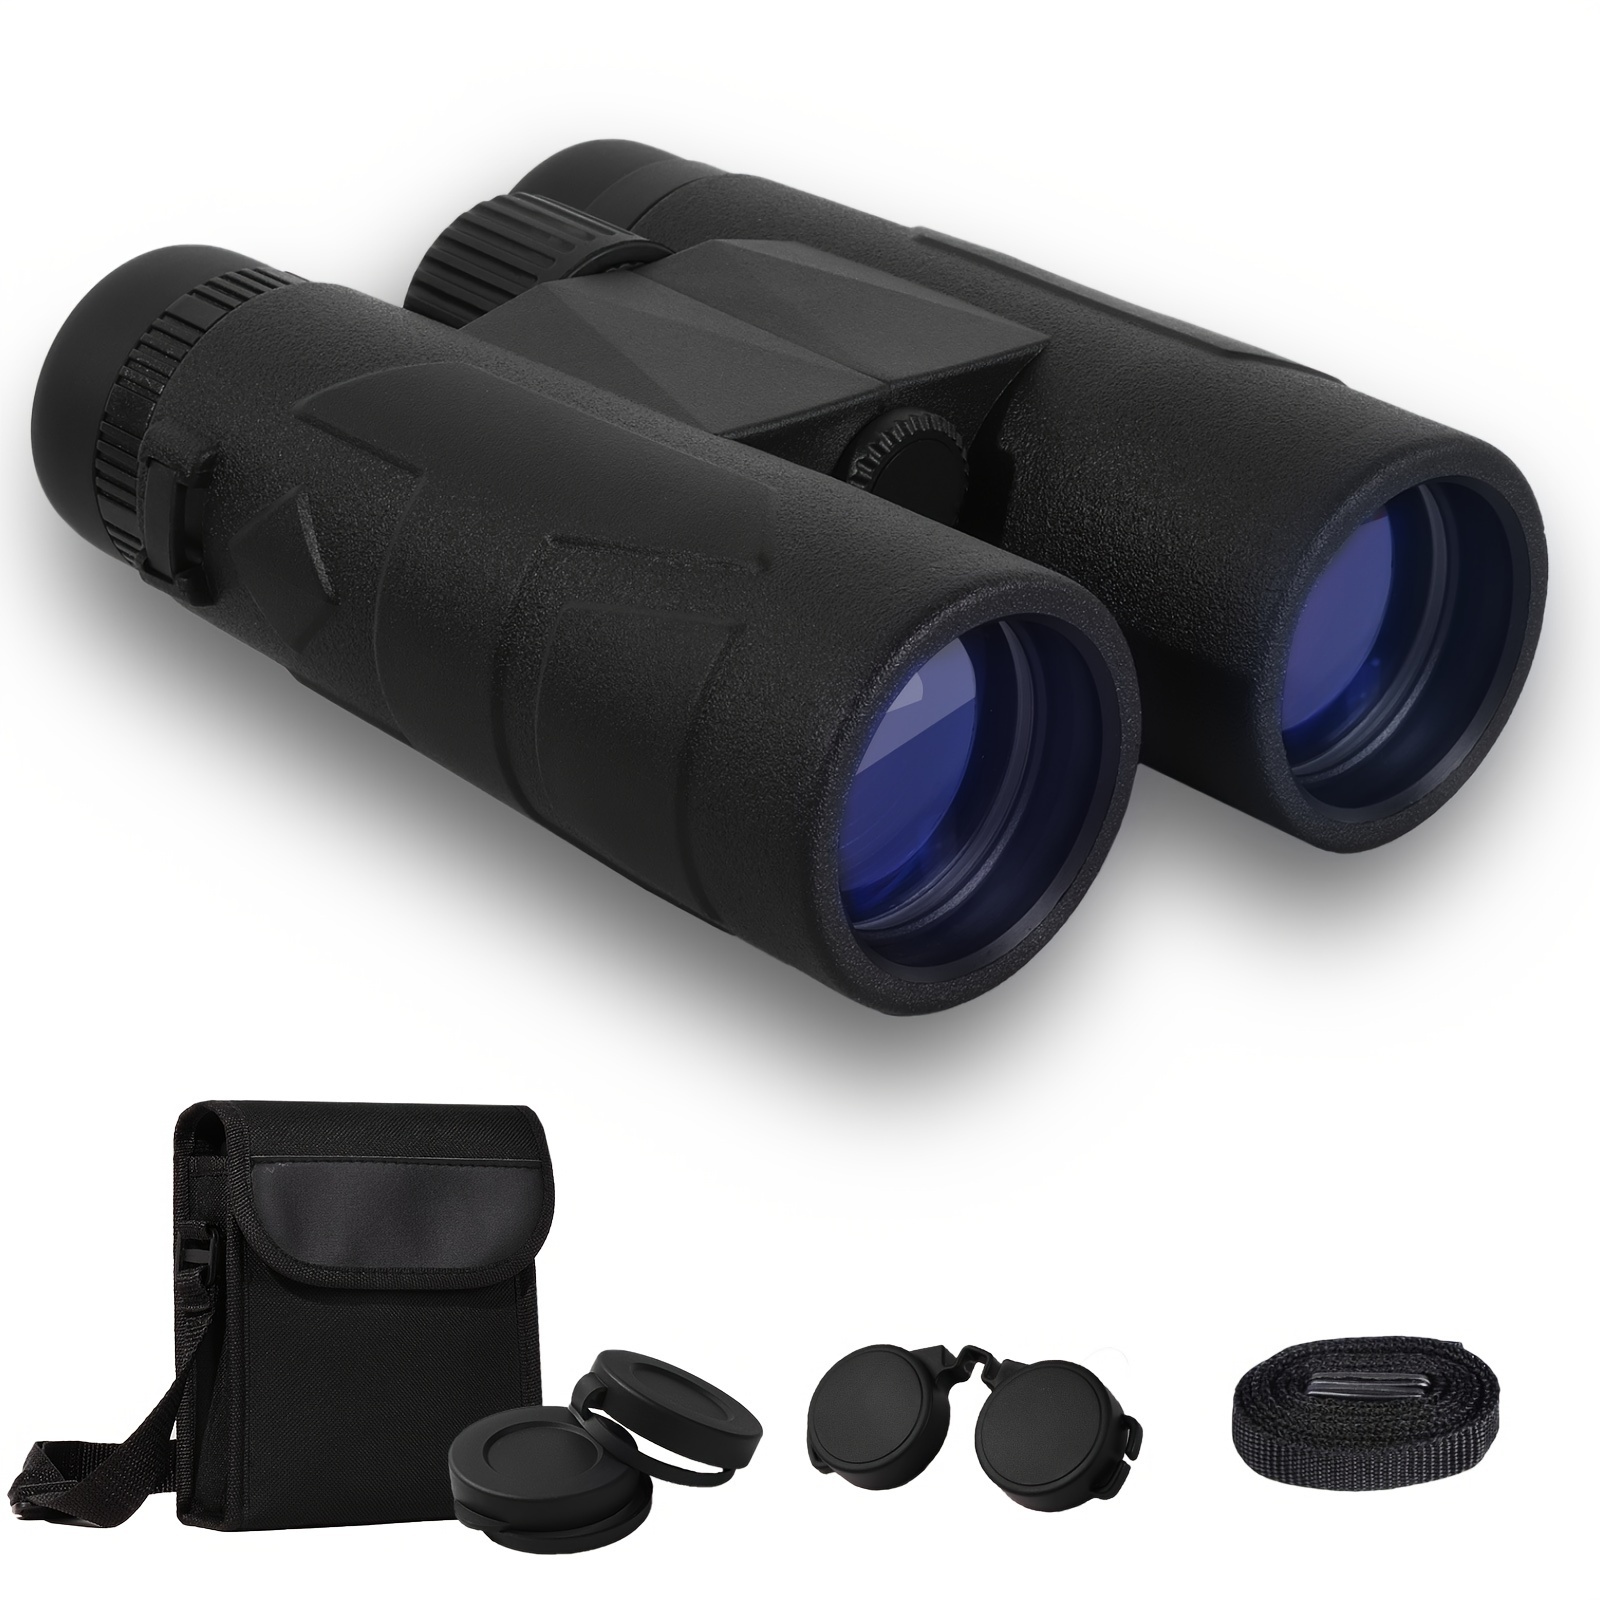 

10x42 Binoculars, Binoculars For Adults High Powered-bak4 Prisms, 10x Magnification, Wide Field Of View, Excellent Low Light Performance, Portable Binoculars For Bird Watching, Outdoor Activities